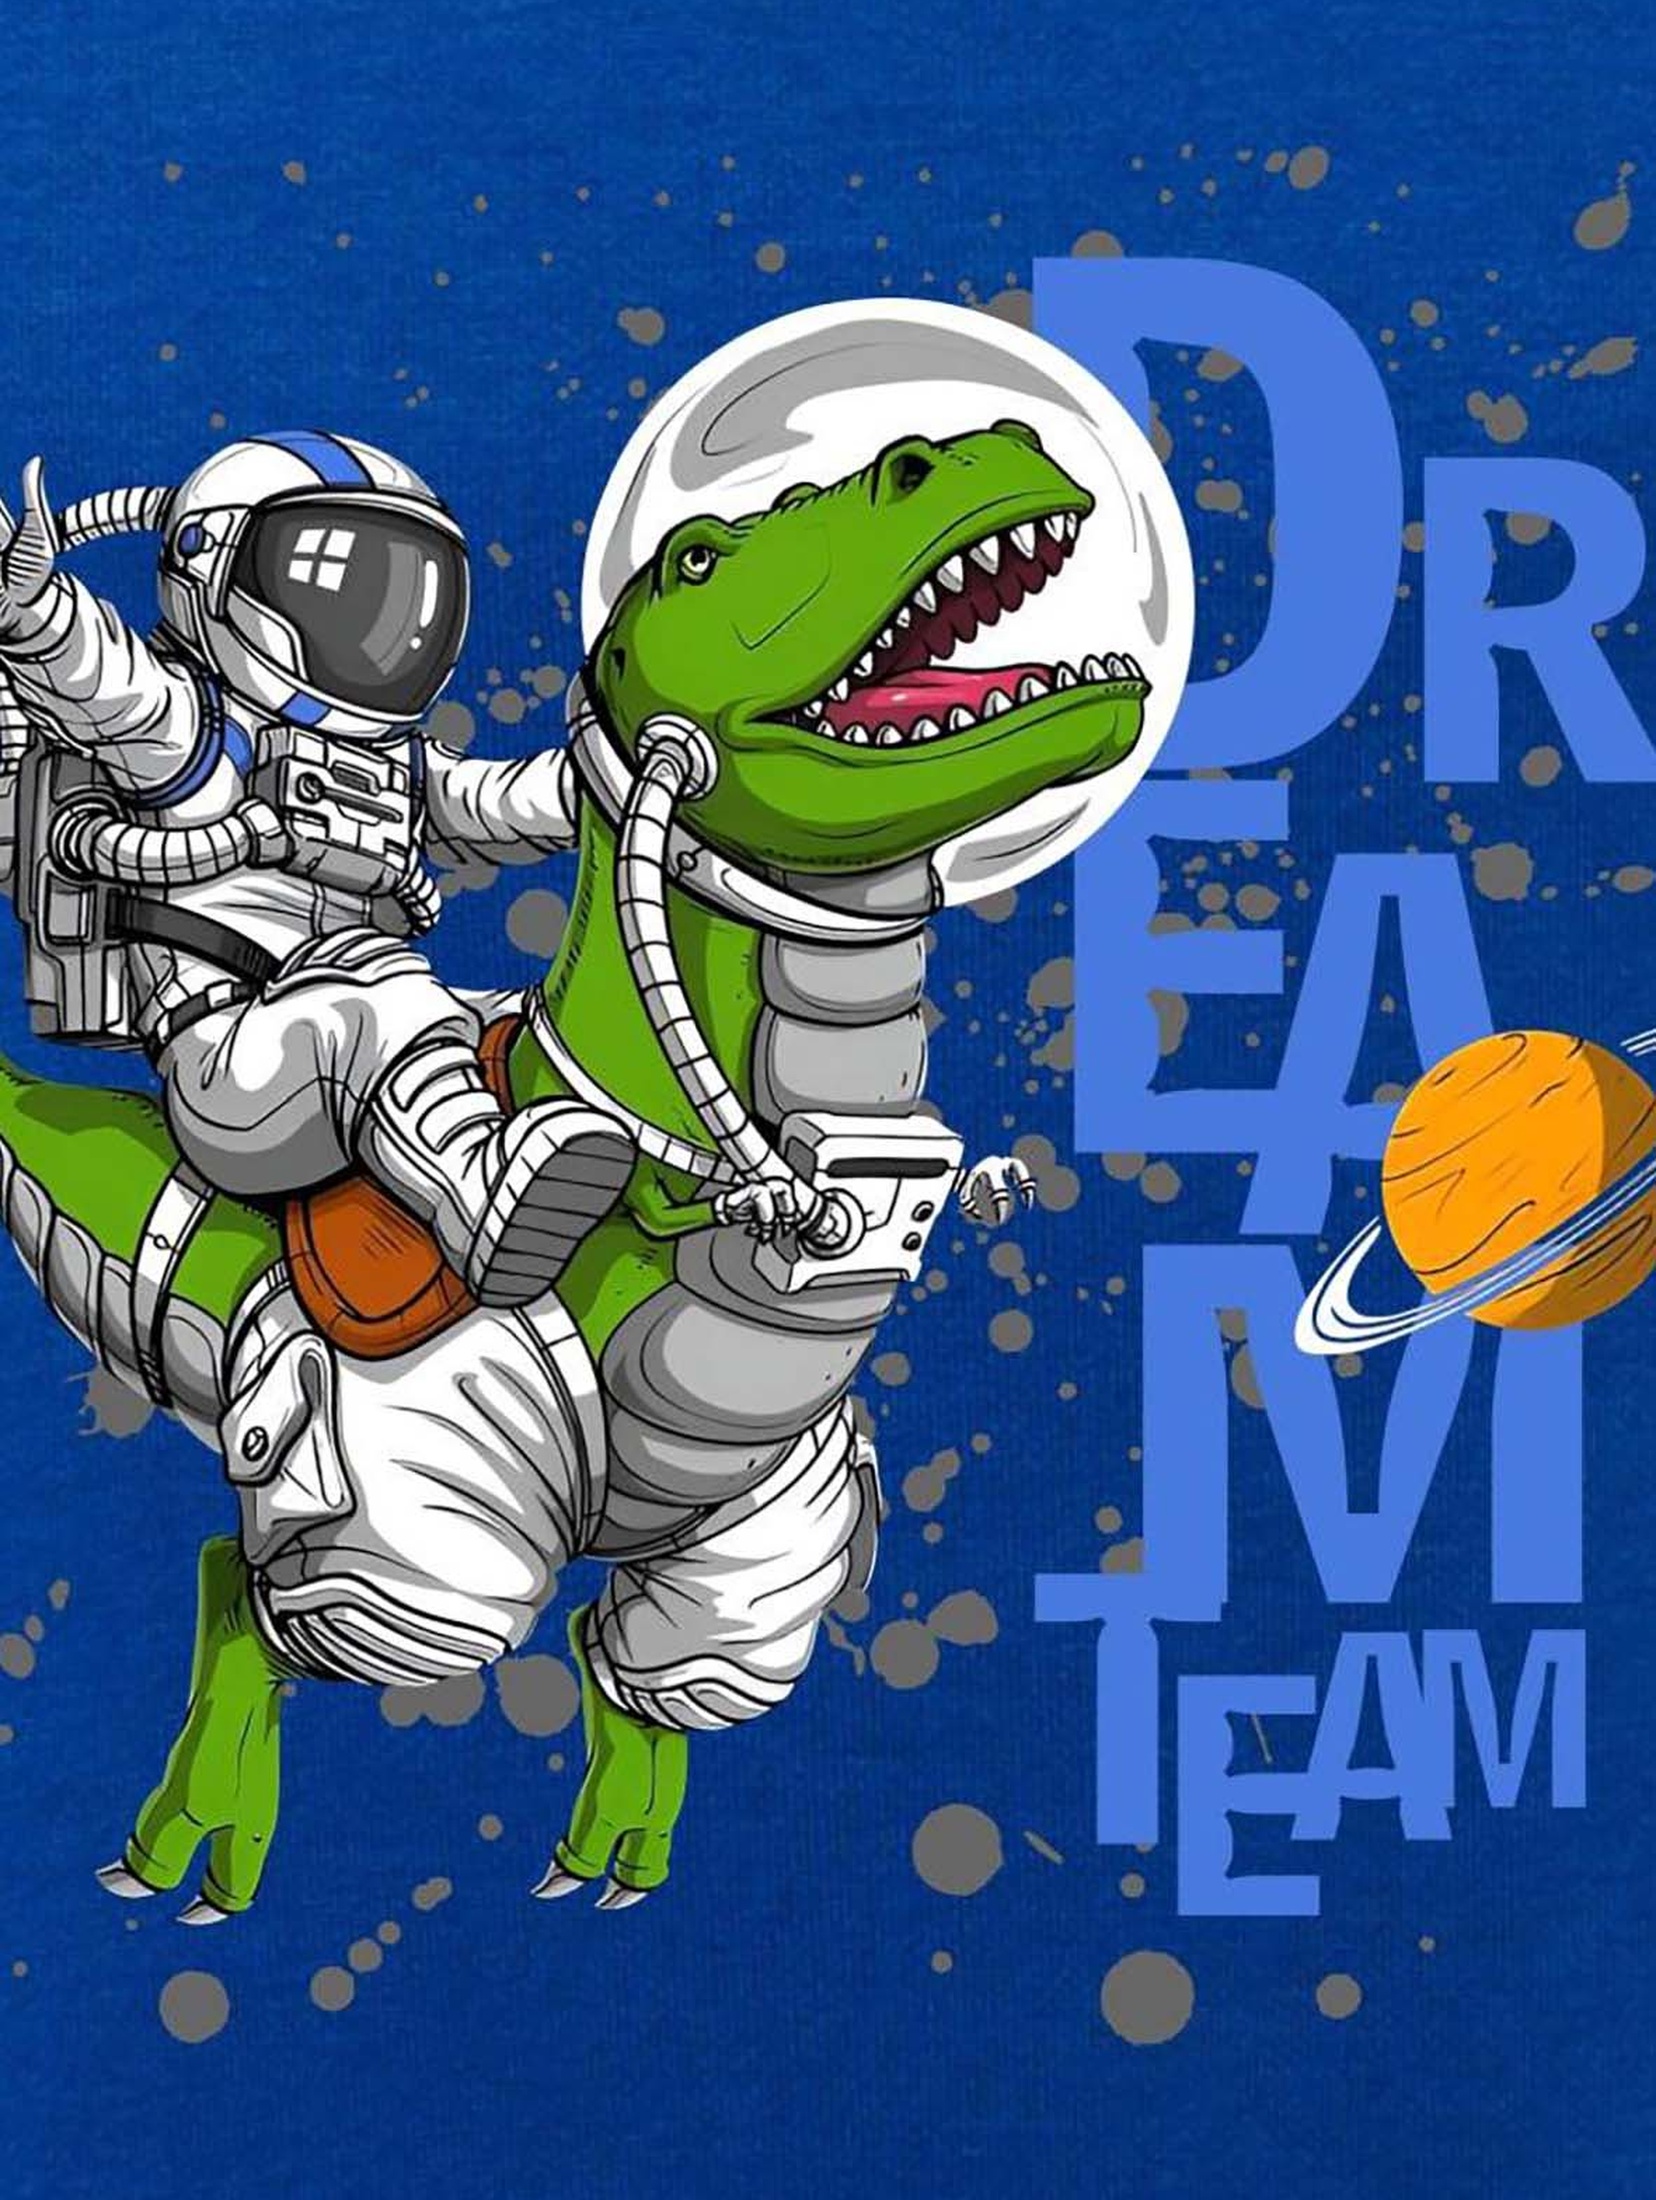 Dzianinowa bluza nierozpinana niebieska Astronauta & Dinozaur